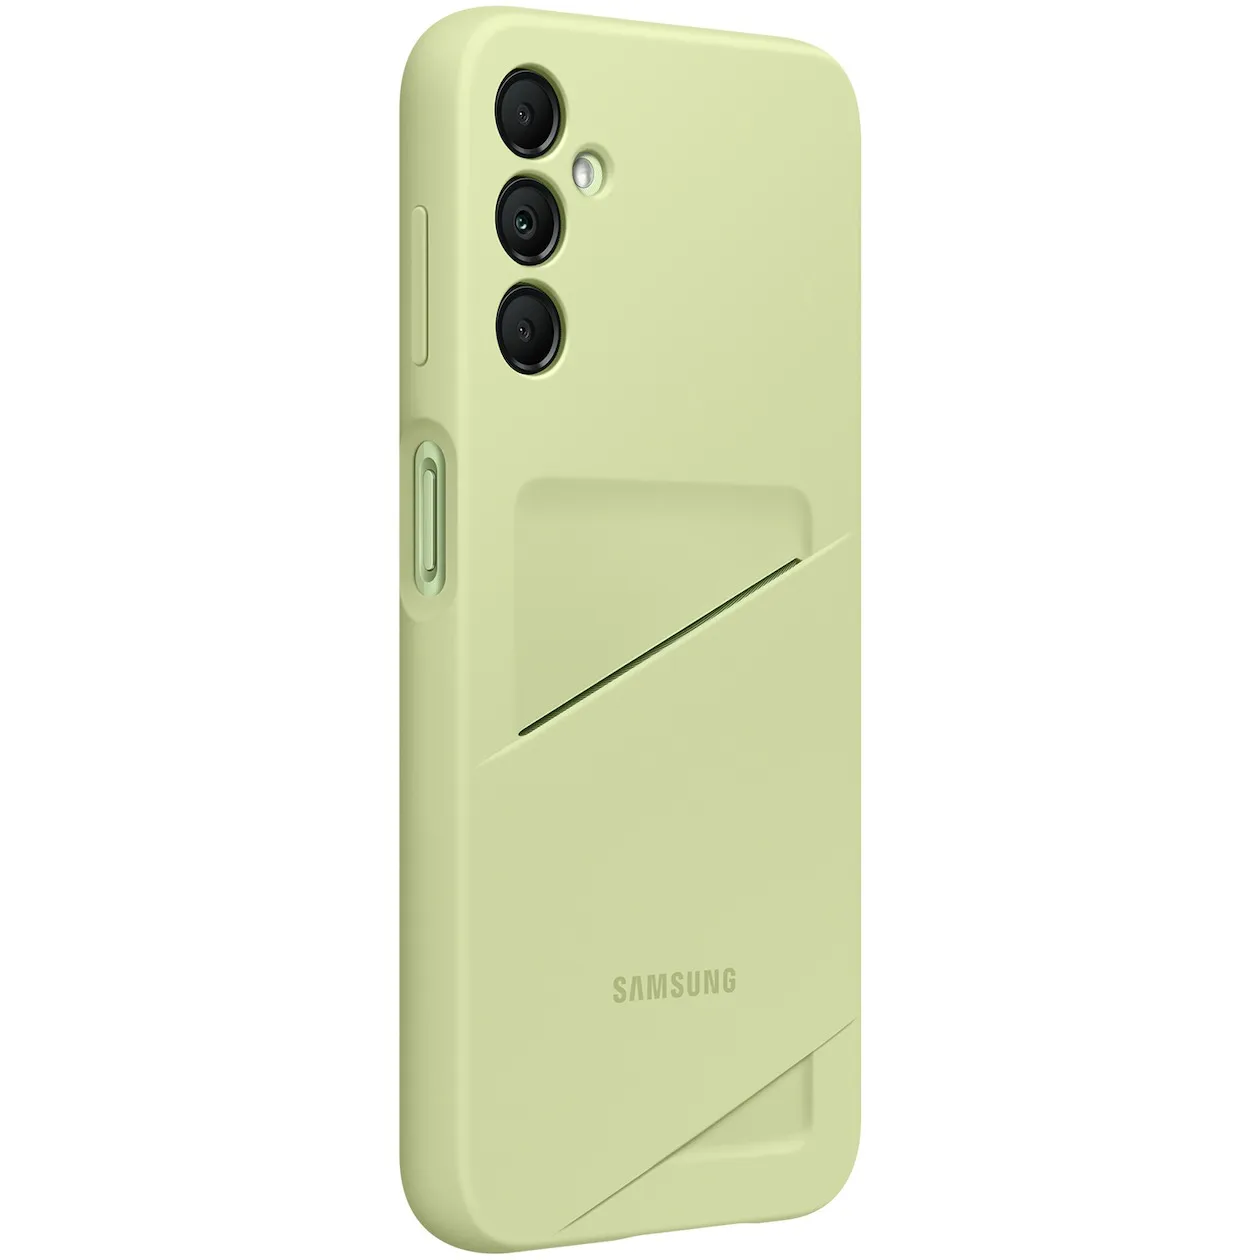 Samsung Samsung Galaxy A14 Card Slot Case Limoen